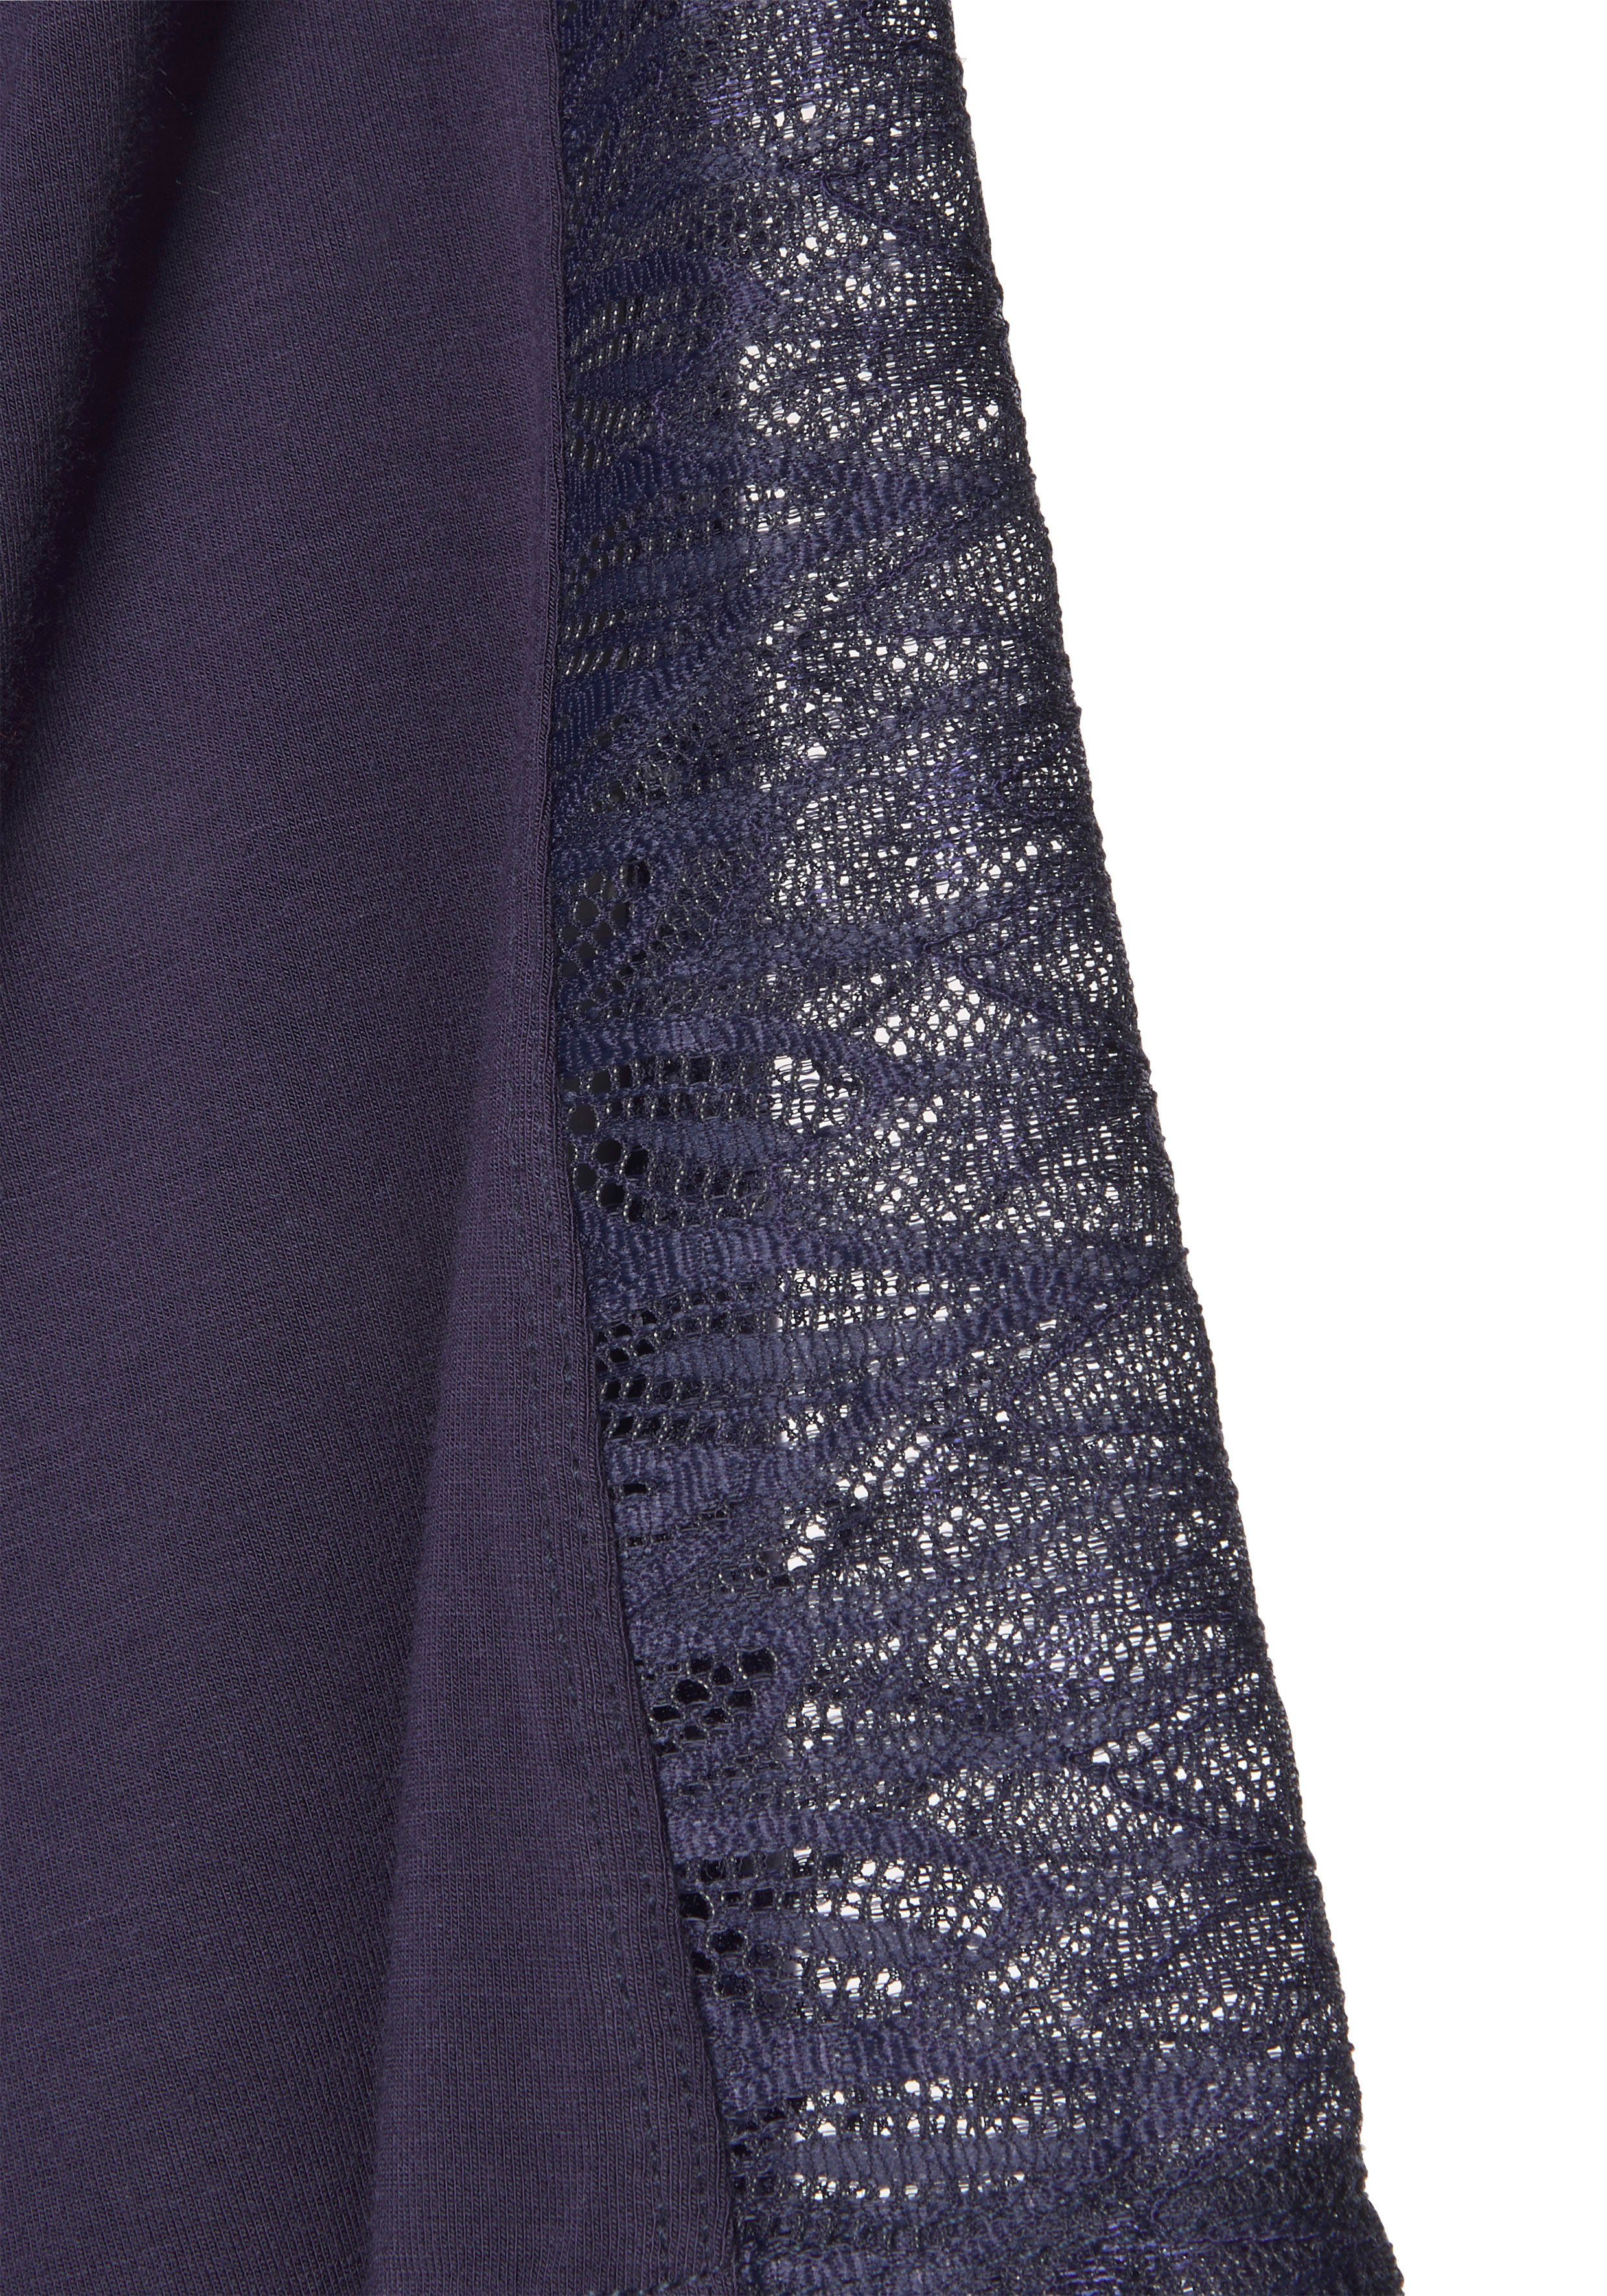 LASCANA Kimono, Langform, nachtblau Single-Jersey, mit Gürtel, Spitzendetails